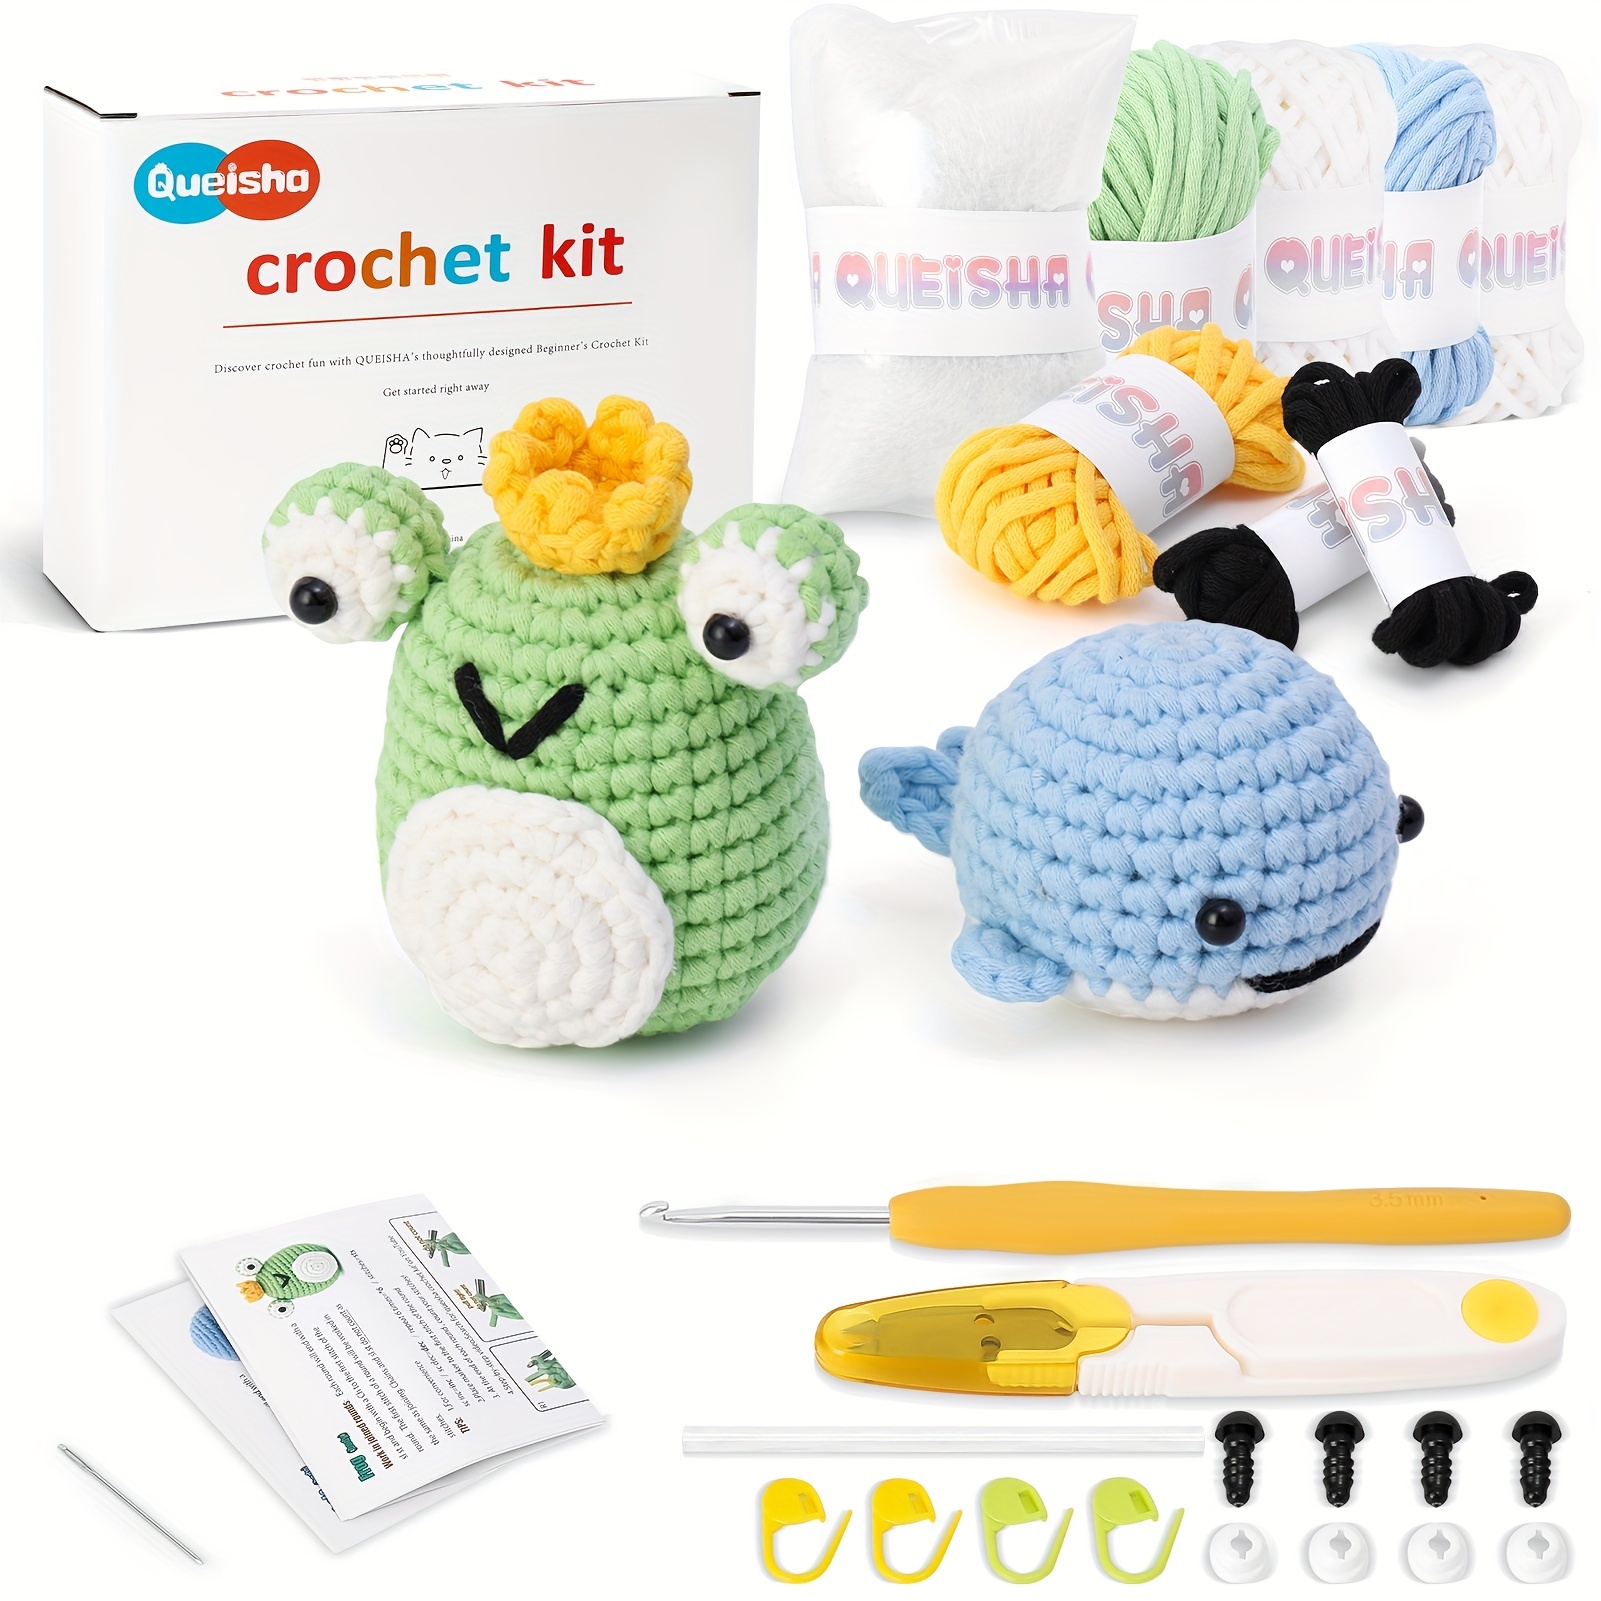 Mewaii Crochet Frog For Beginners Crochet Kits with Easy Peasy Yarn